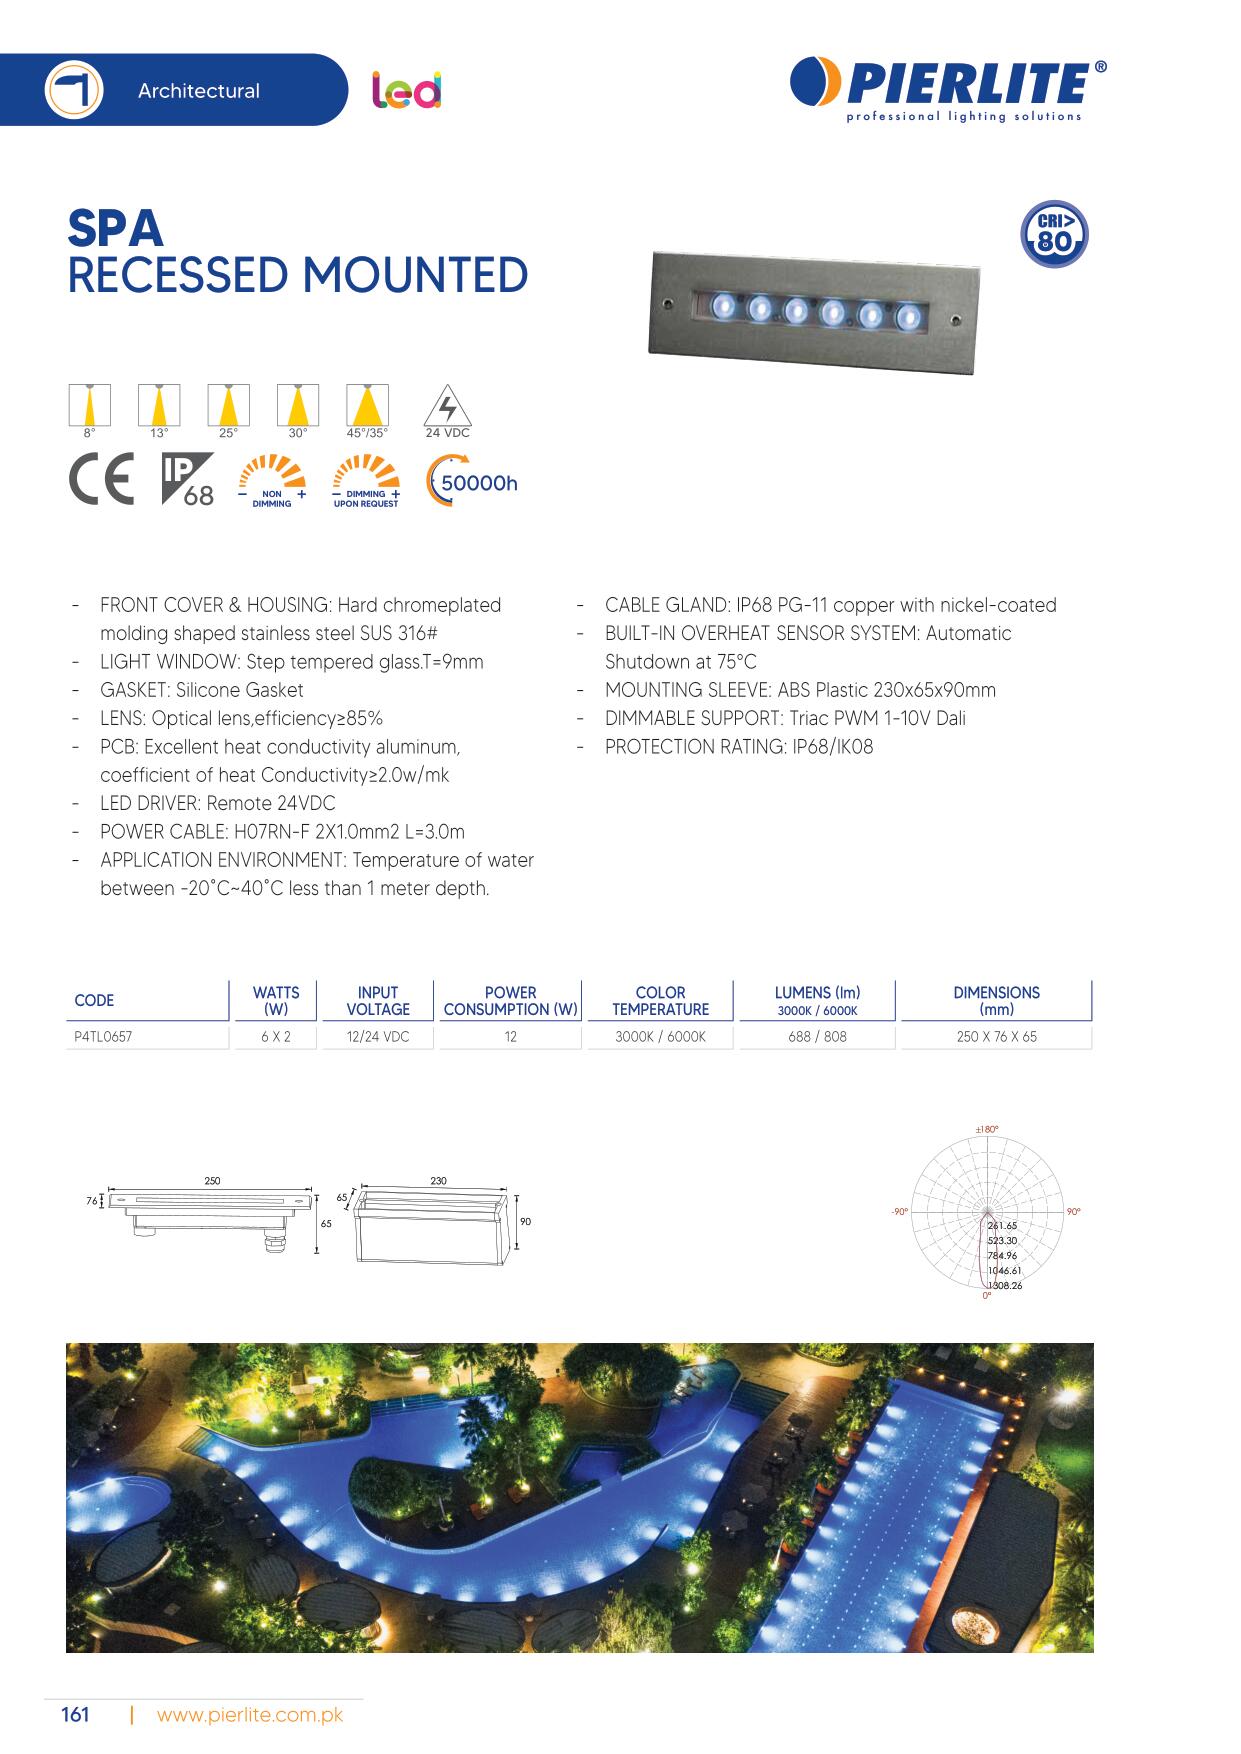 Pierlite LED Luminaire Catalog 2021-170